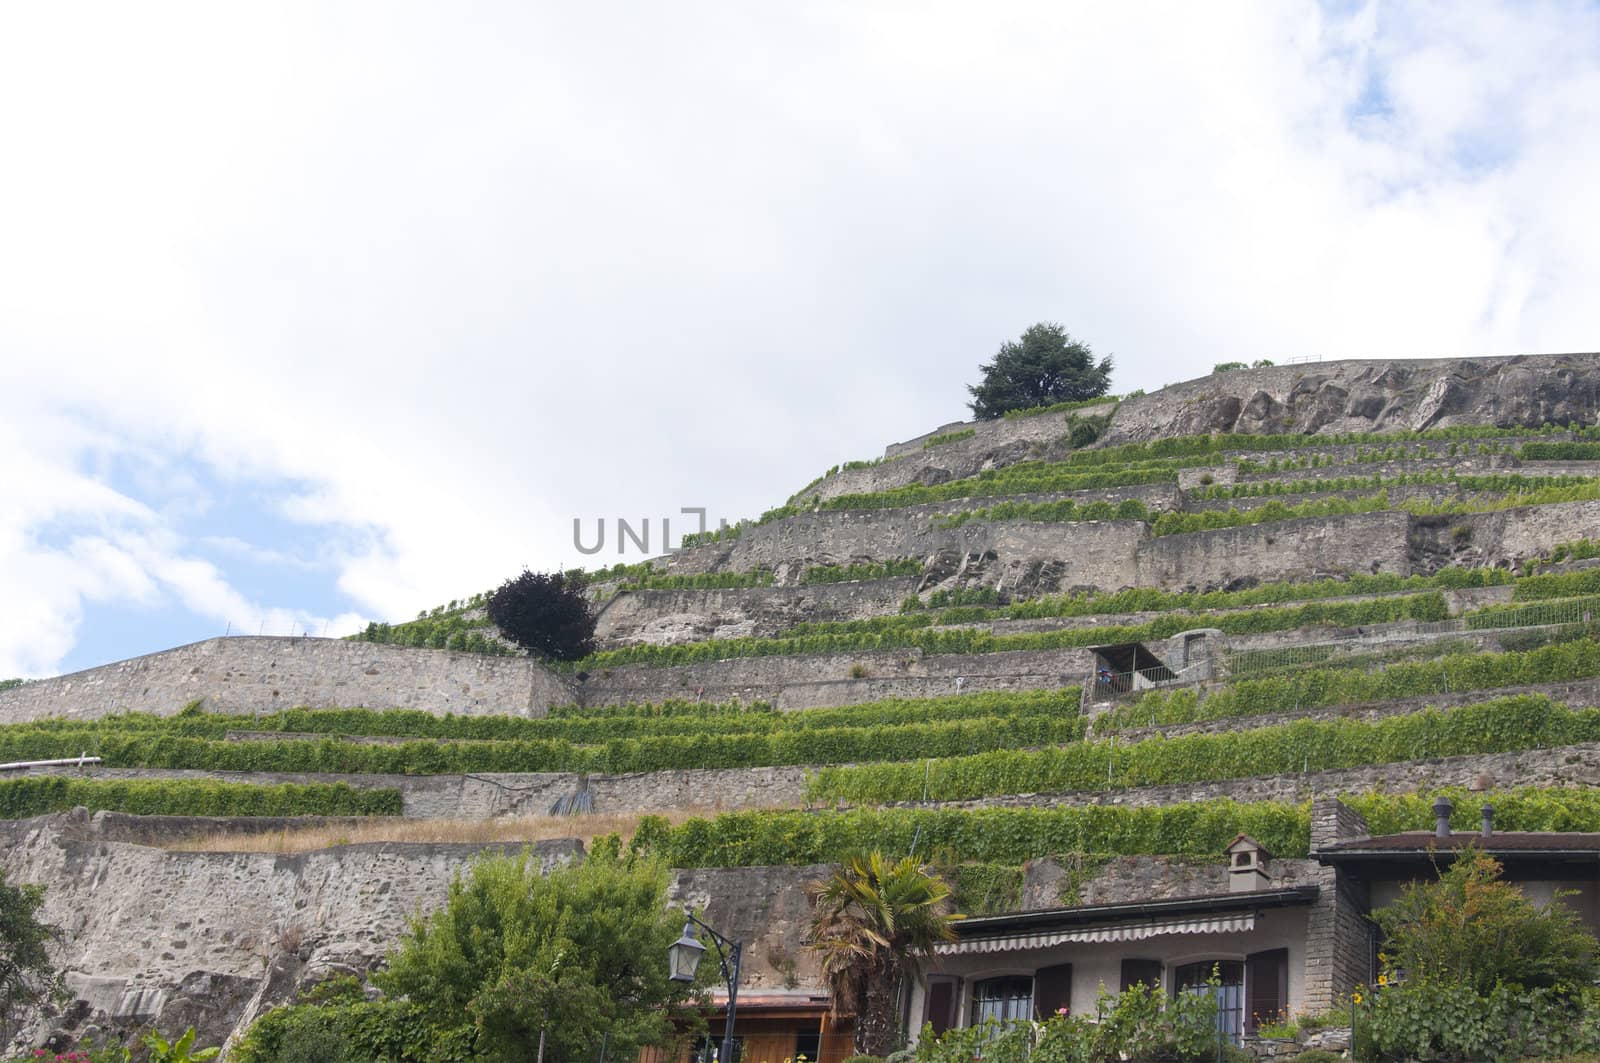 Vineyard Terraces in Saint-Saphorin, Switzerland by kdreams02